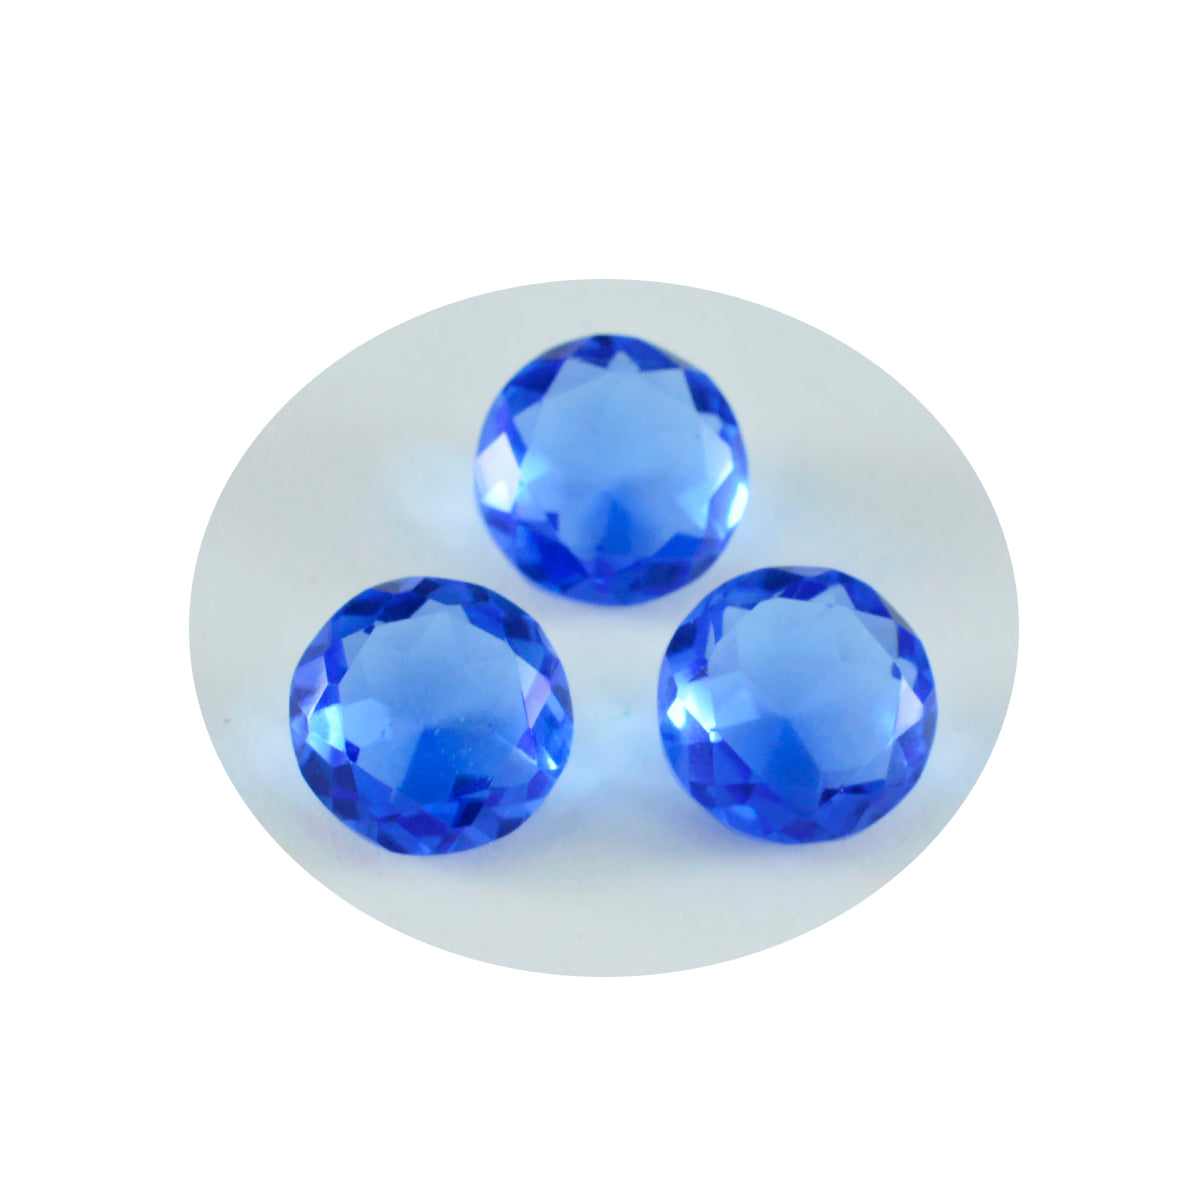 Riyogems 1 pieza zafiro azul CZ facetado 12x12 mm forma redonda gemas de calidad